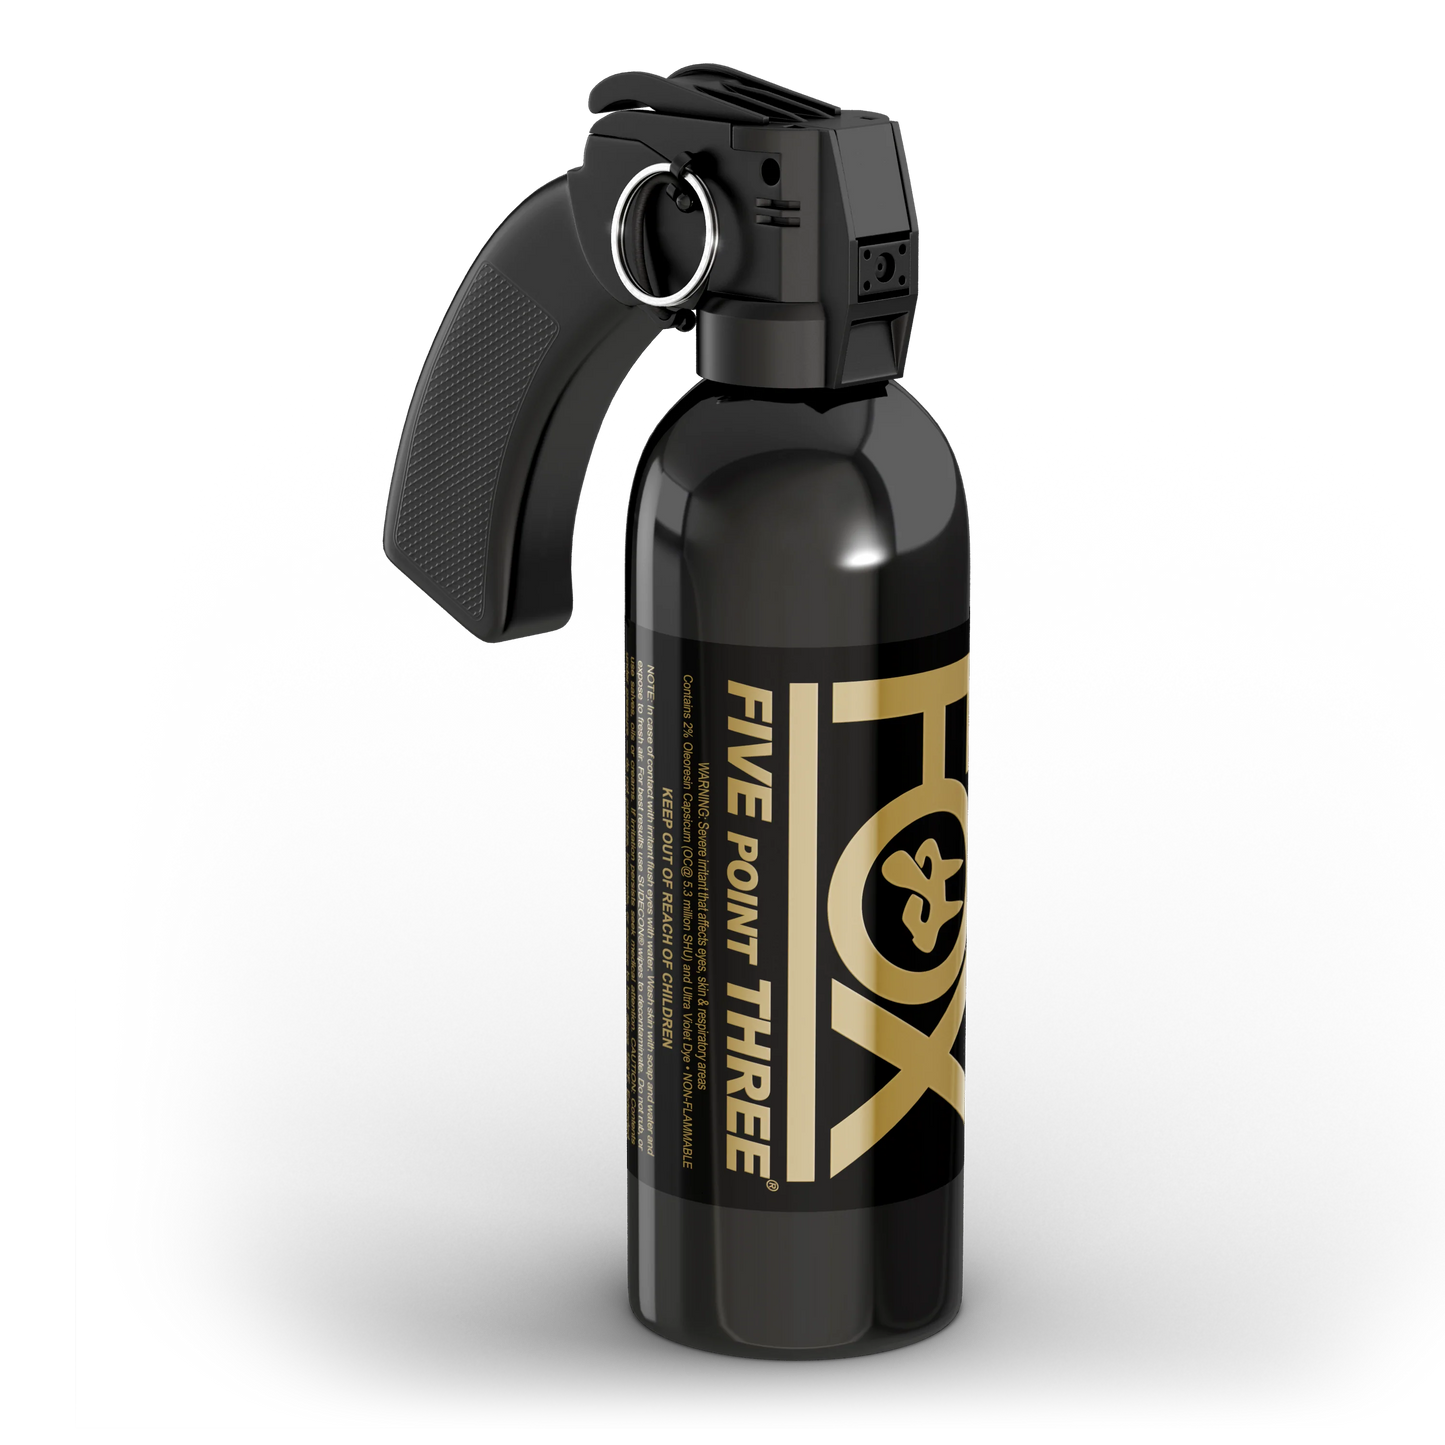 Five Point Three® Legacy Pepper Spray with 5.3M Scoville Heat Units plus UV Marking Dye, 1LB Stream Pistol Grip Crowd Control